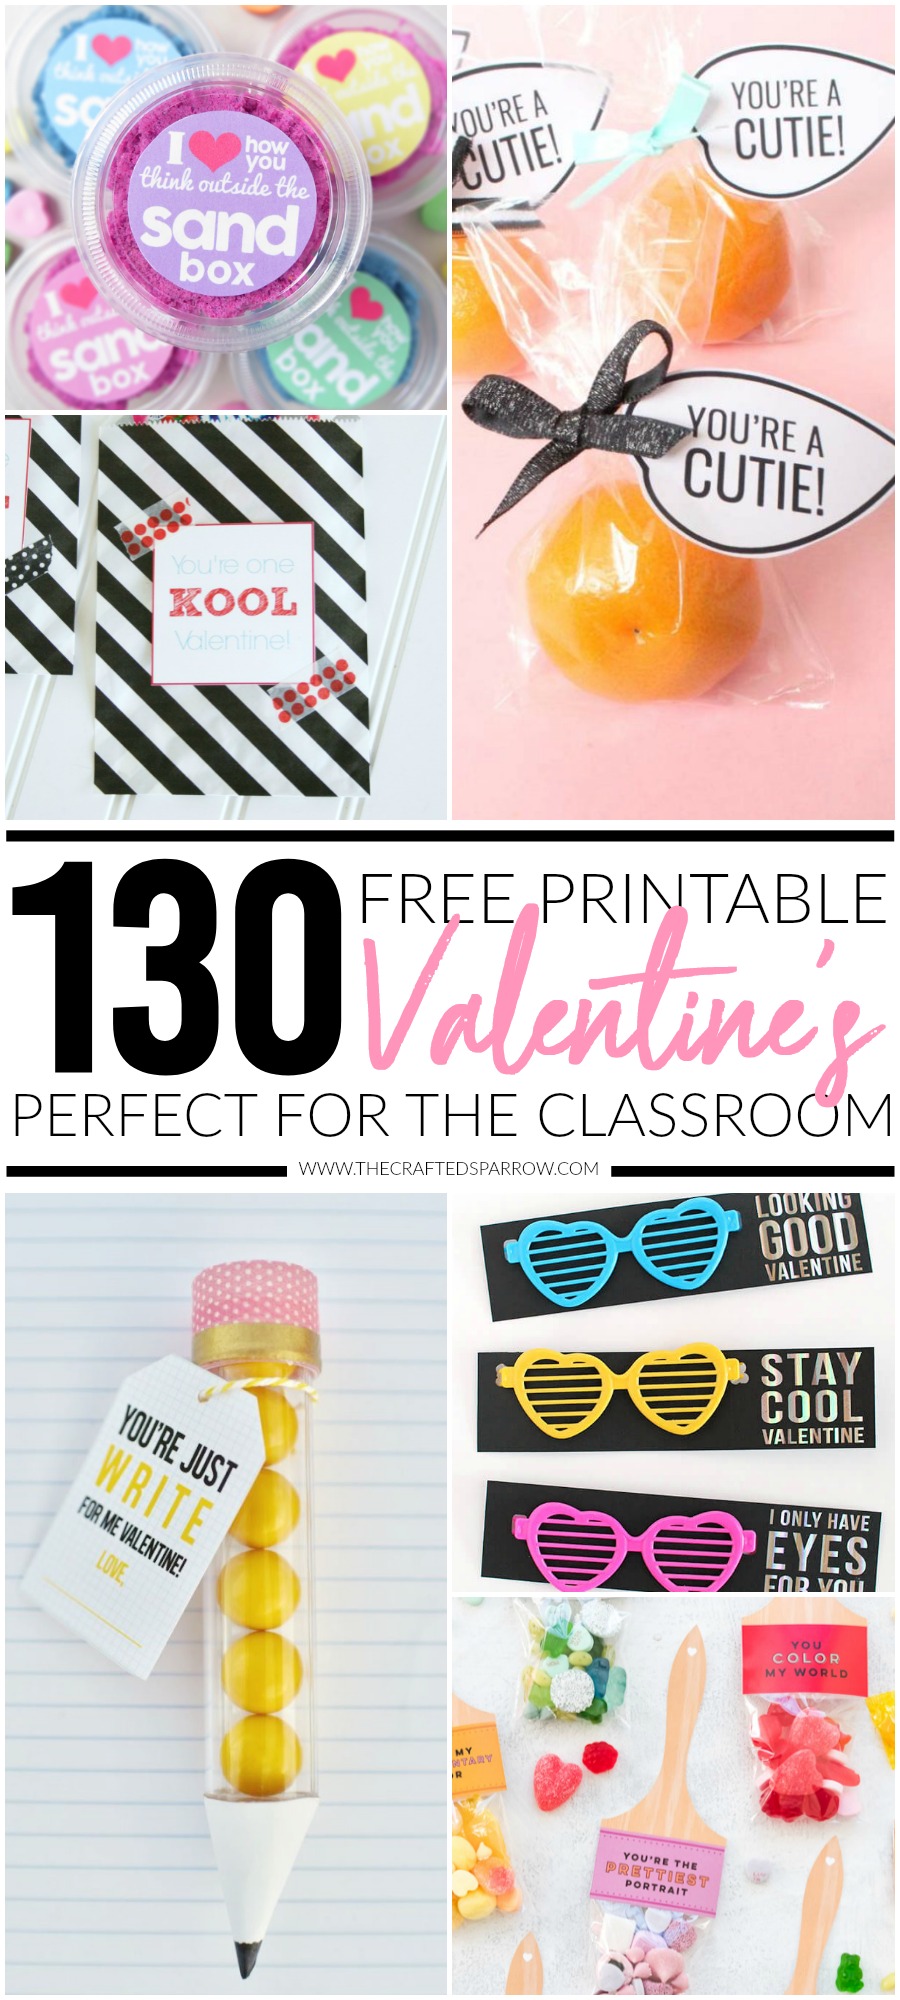 The Best Free Printable Valentines